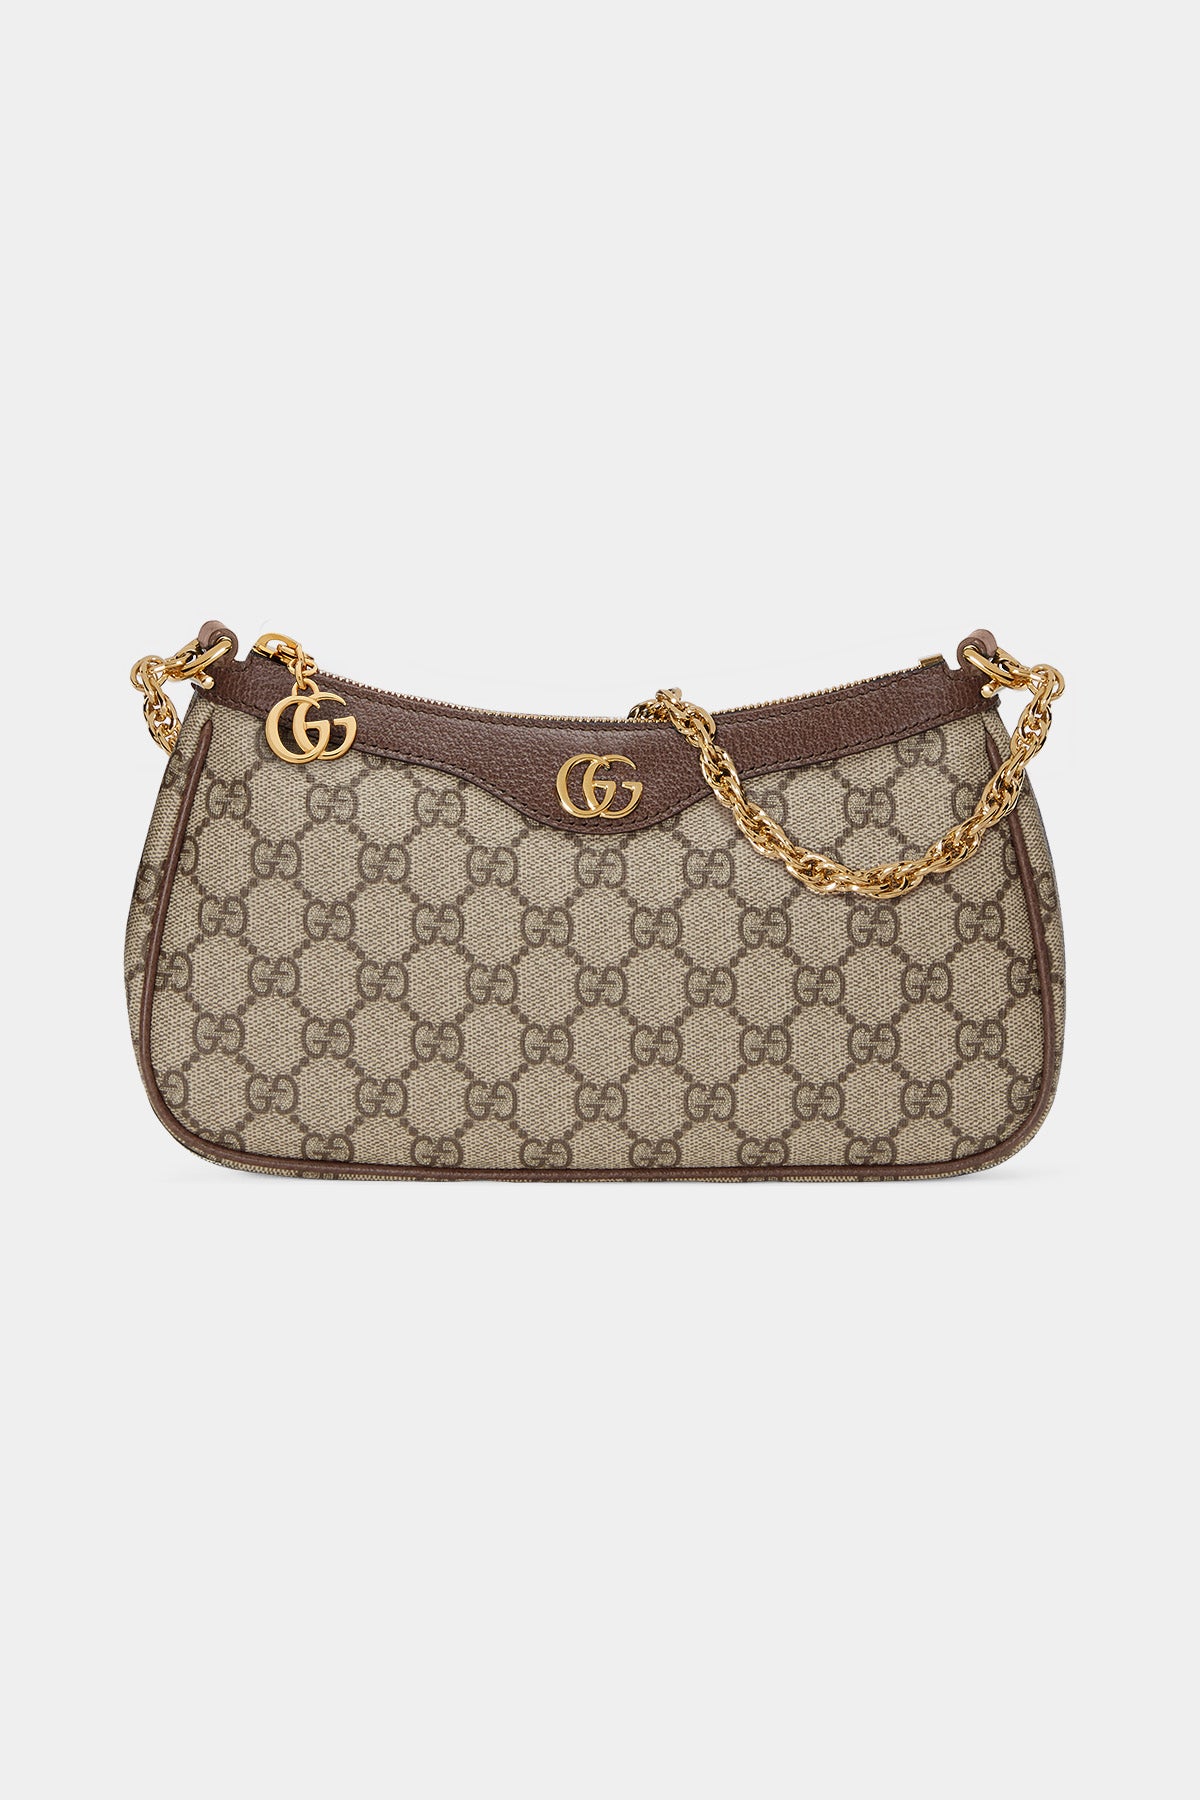 Gucci Black Suede and Leather Mini Dionysus Shoulder Bag